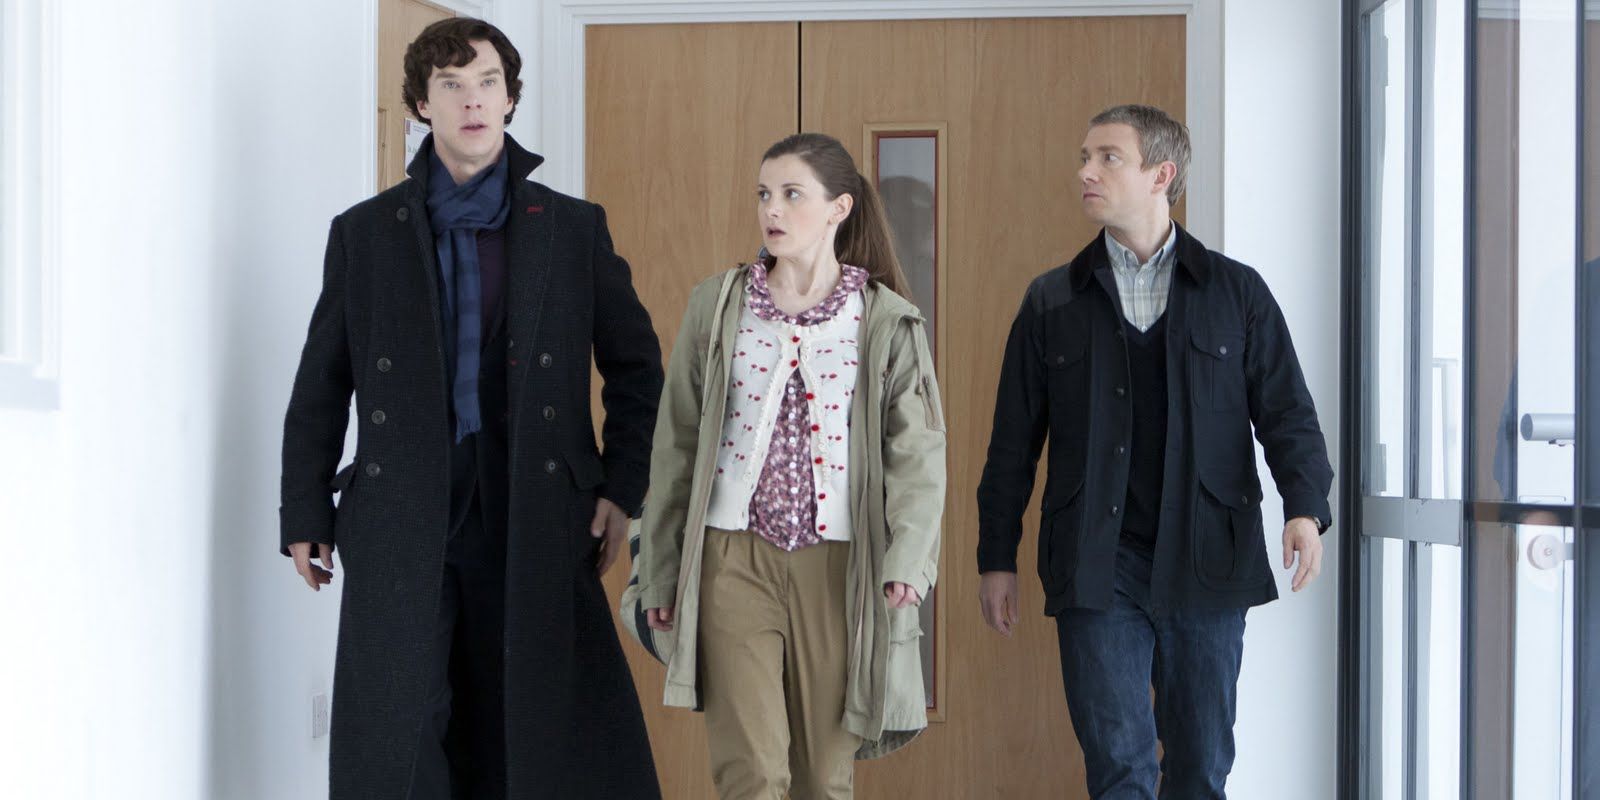 Sherlock, Molly Hooper, and John Watson in the BBC series Sherlock